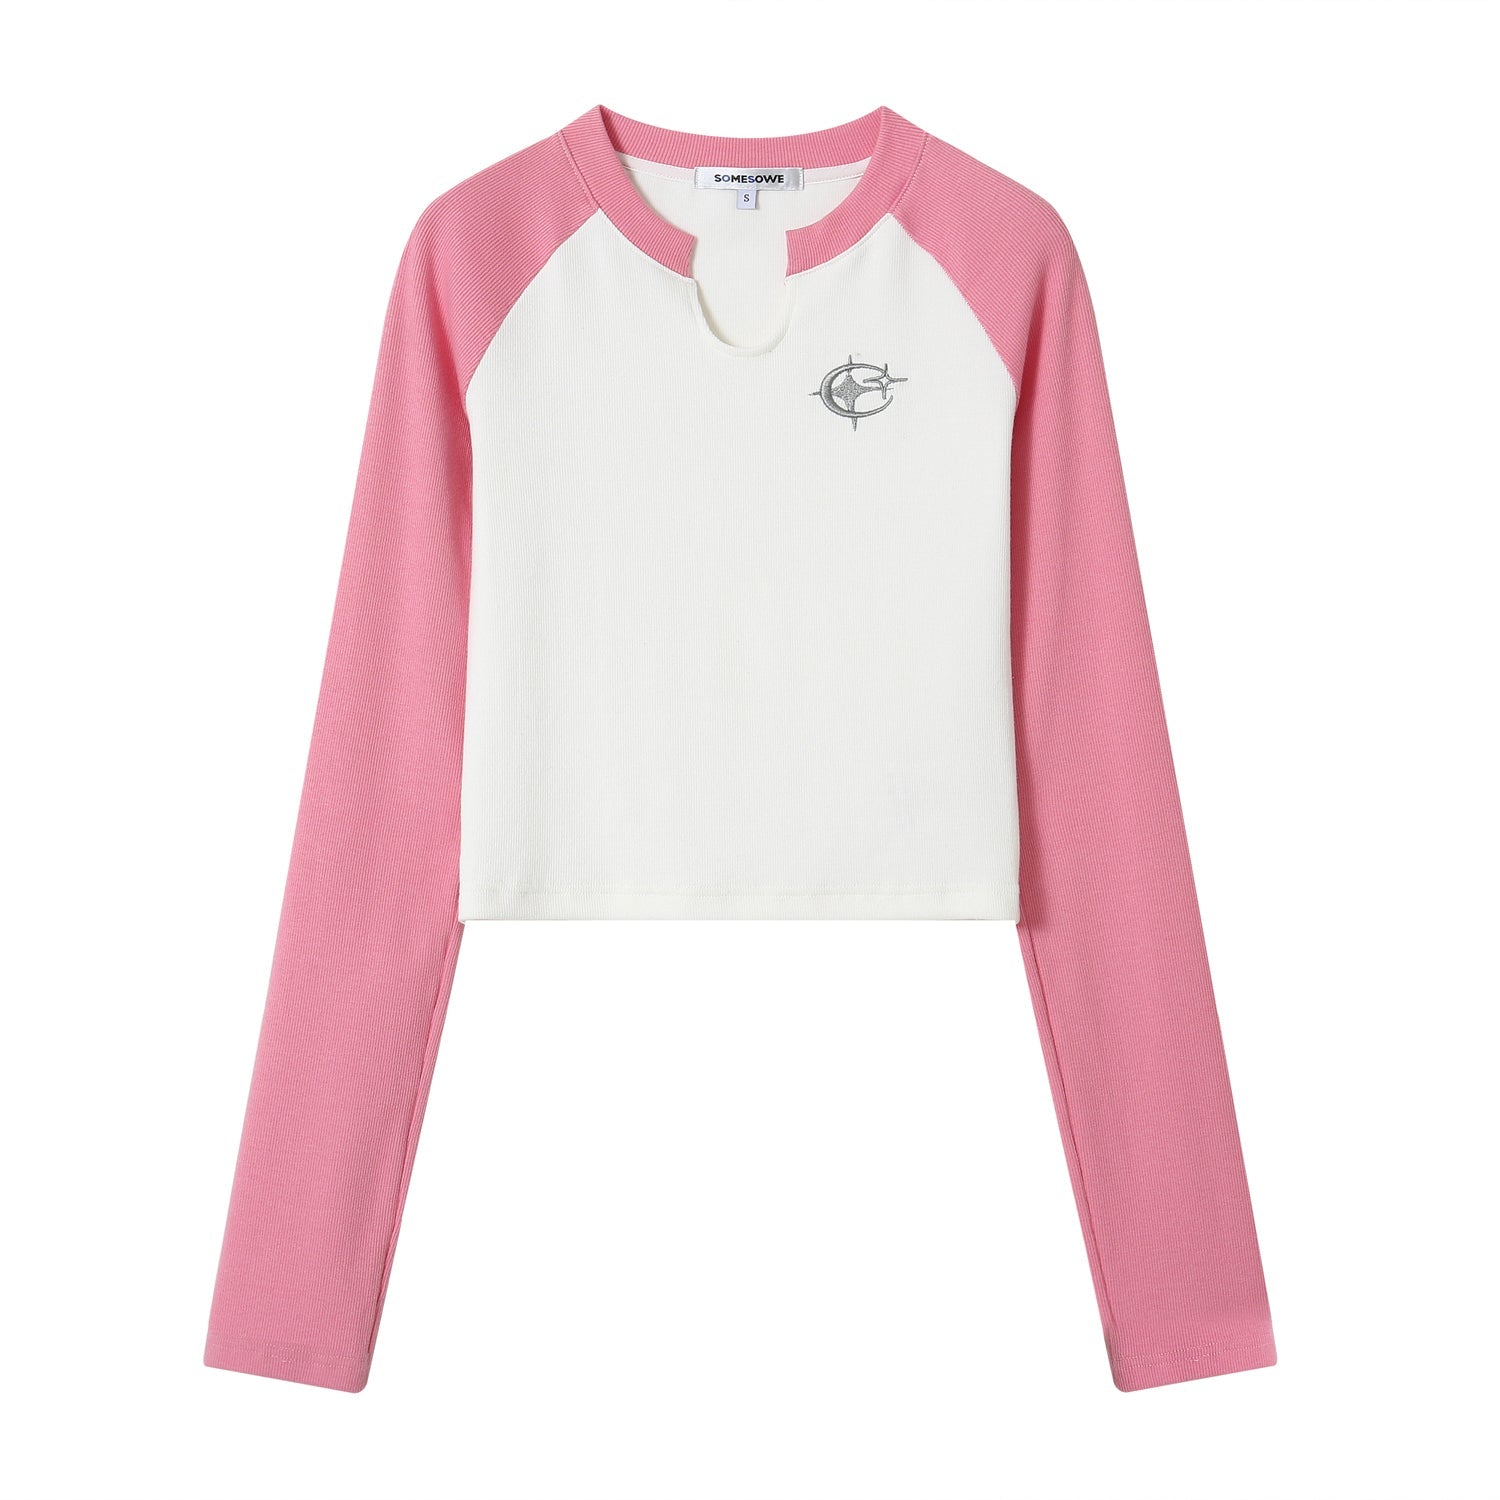 SOMESOWE Pink And White U-Neck Base Shirt | MADA IN CHINA